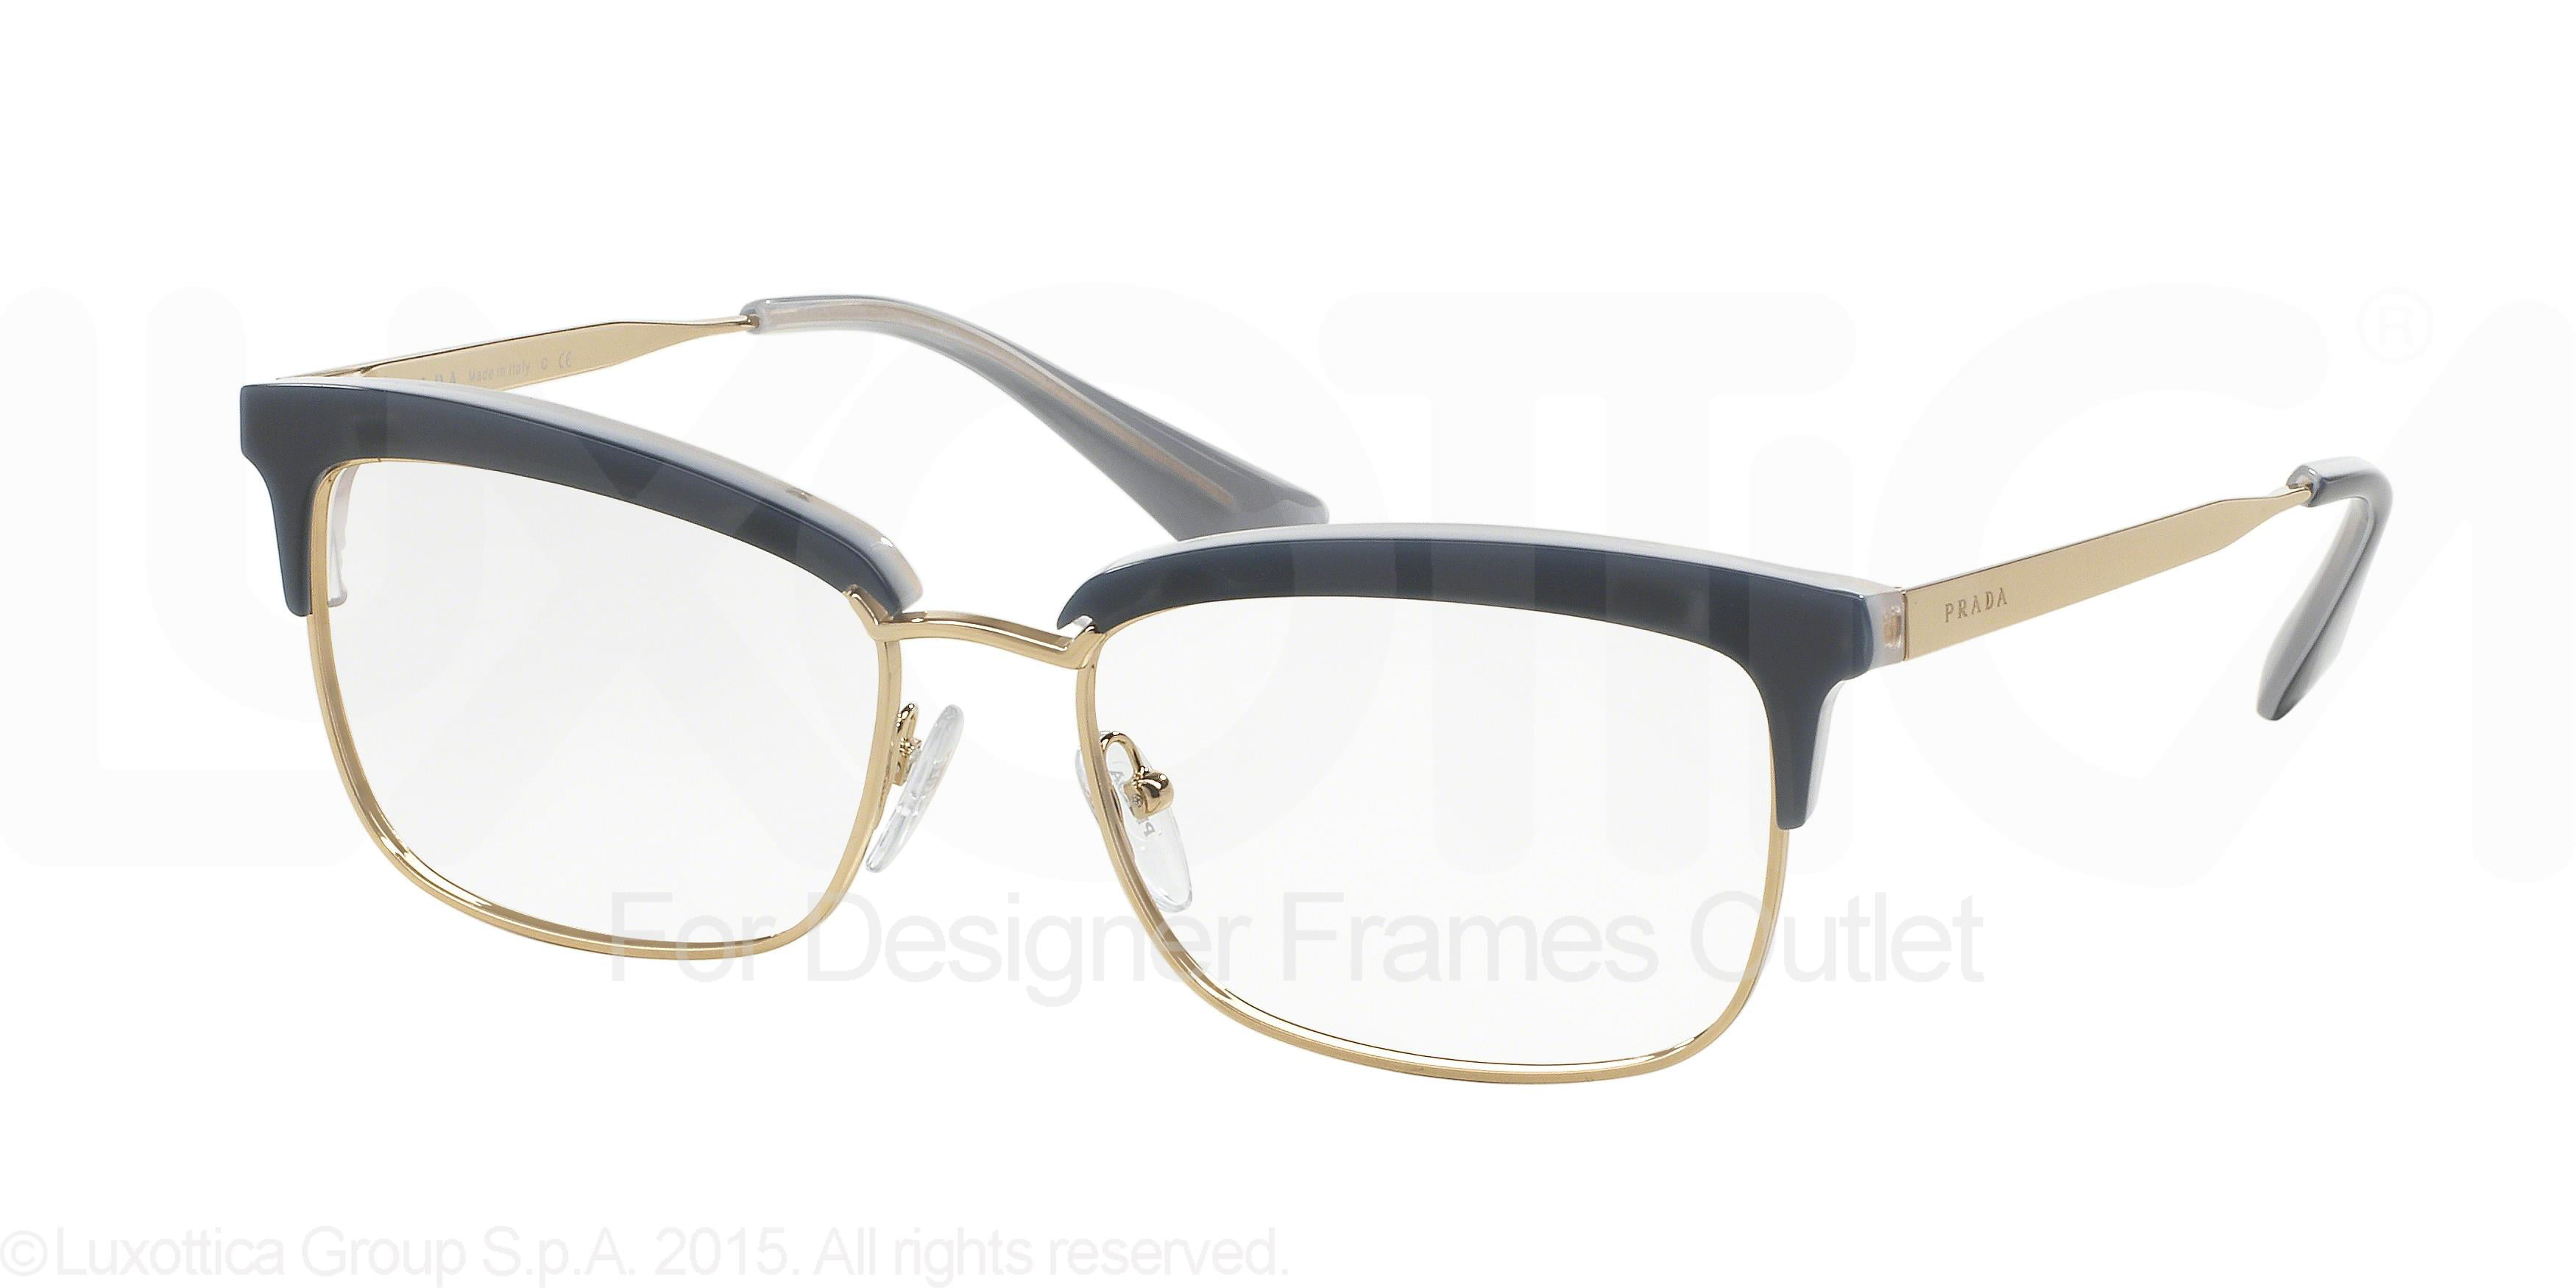 Prada Eyeglass Frames For Sale Ebay